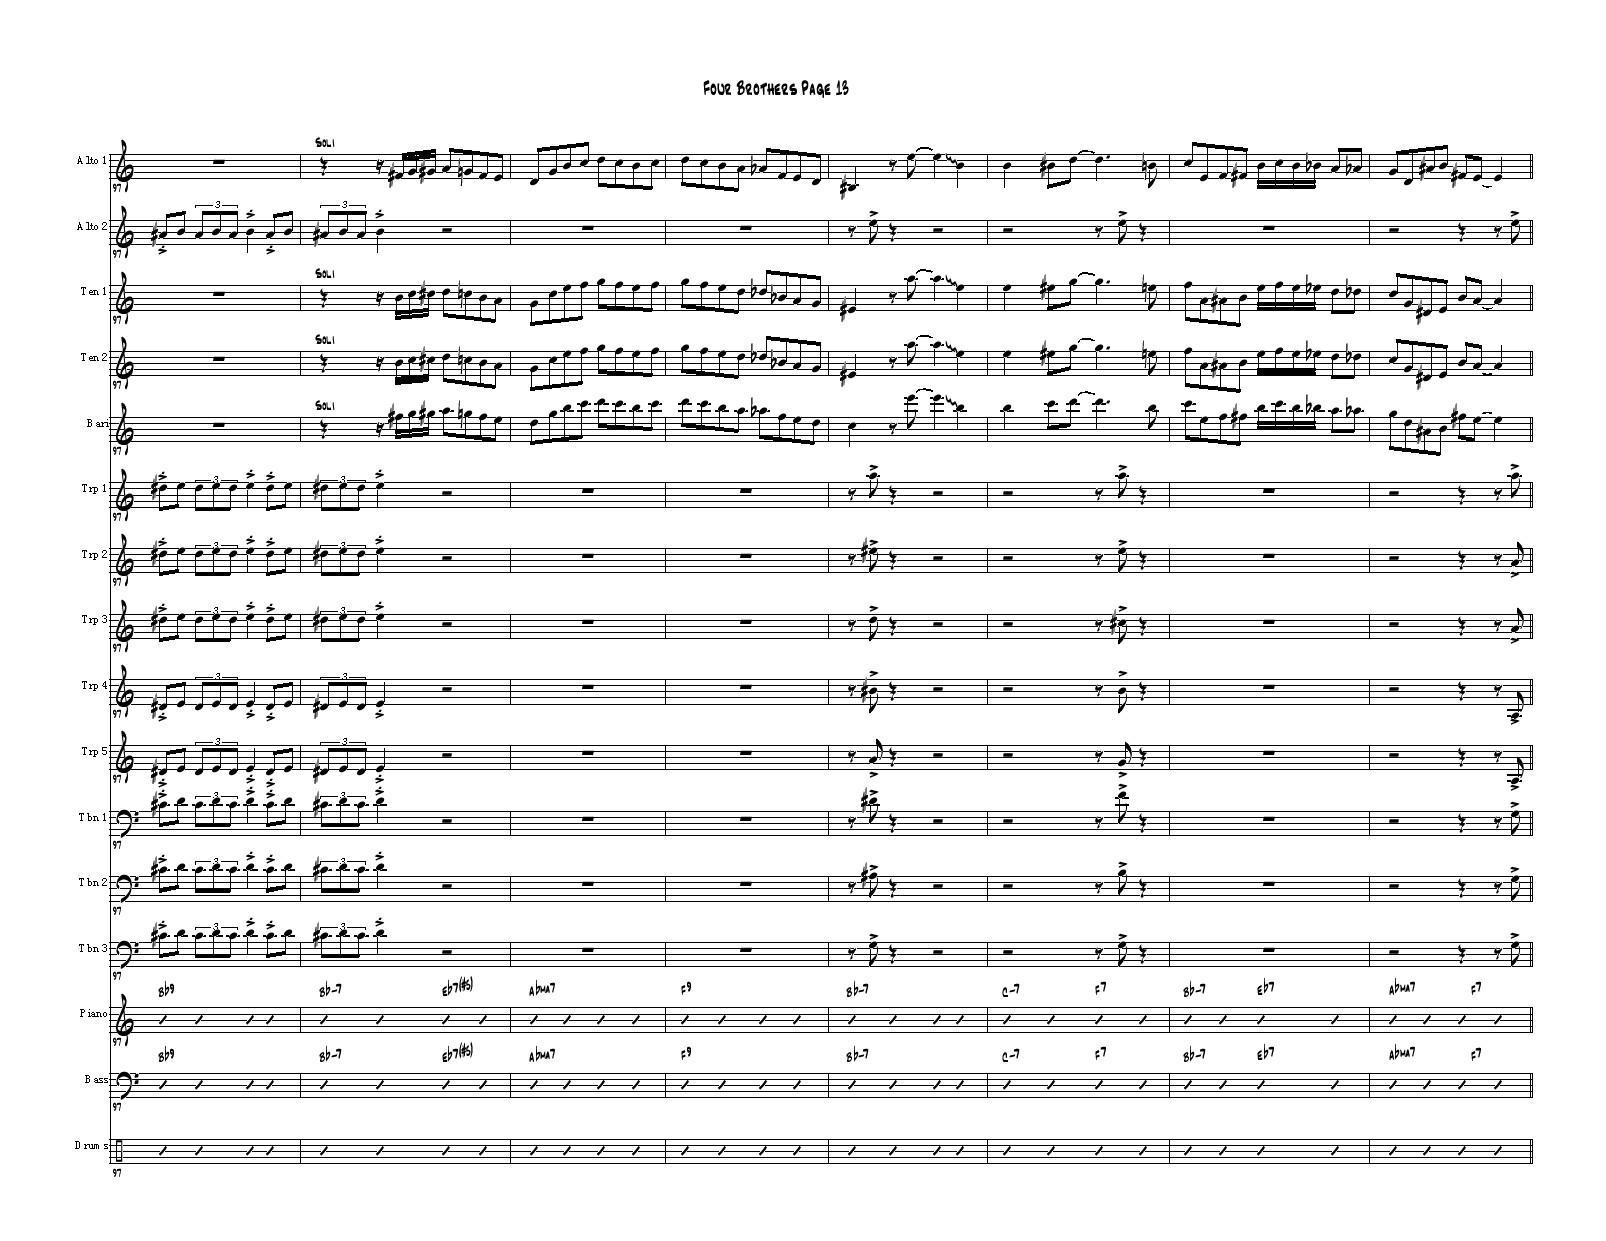 Four Brothers Big Band score（大爵士乐队总谱）其它曲谱（图13）